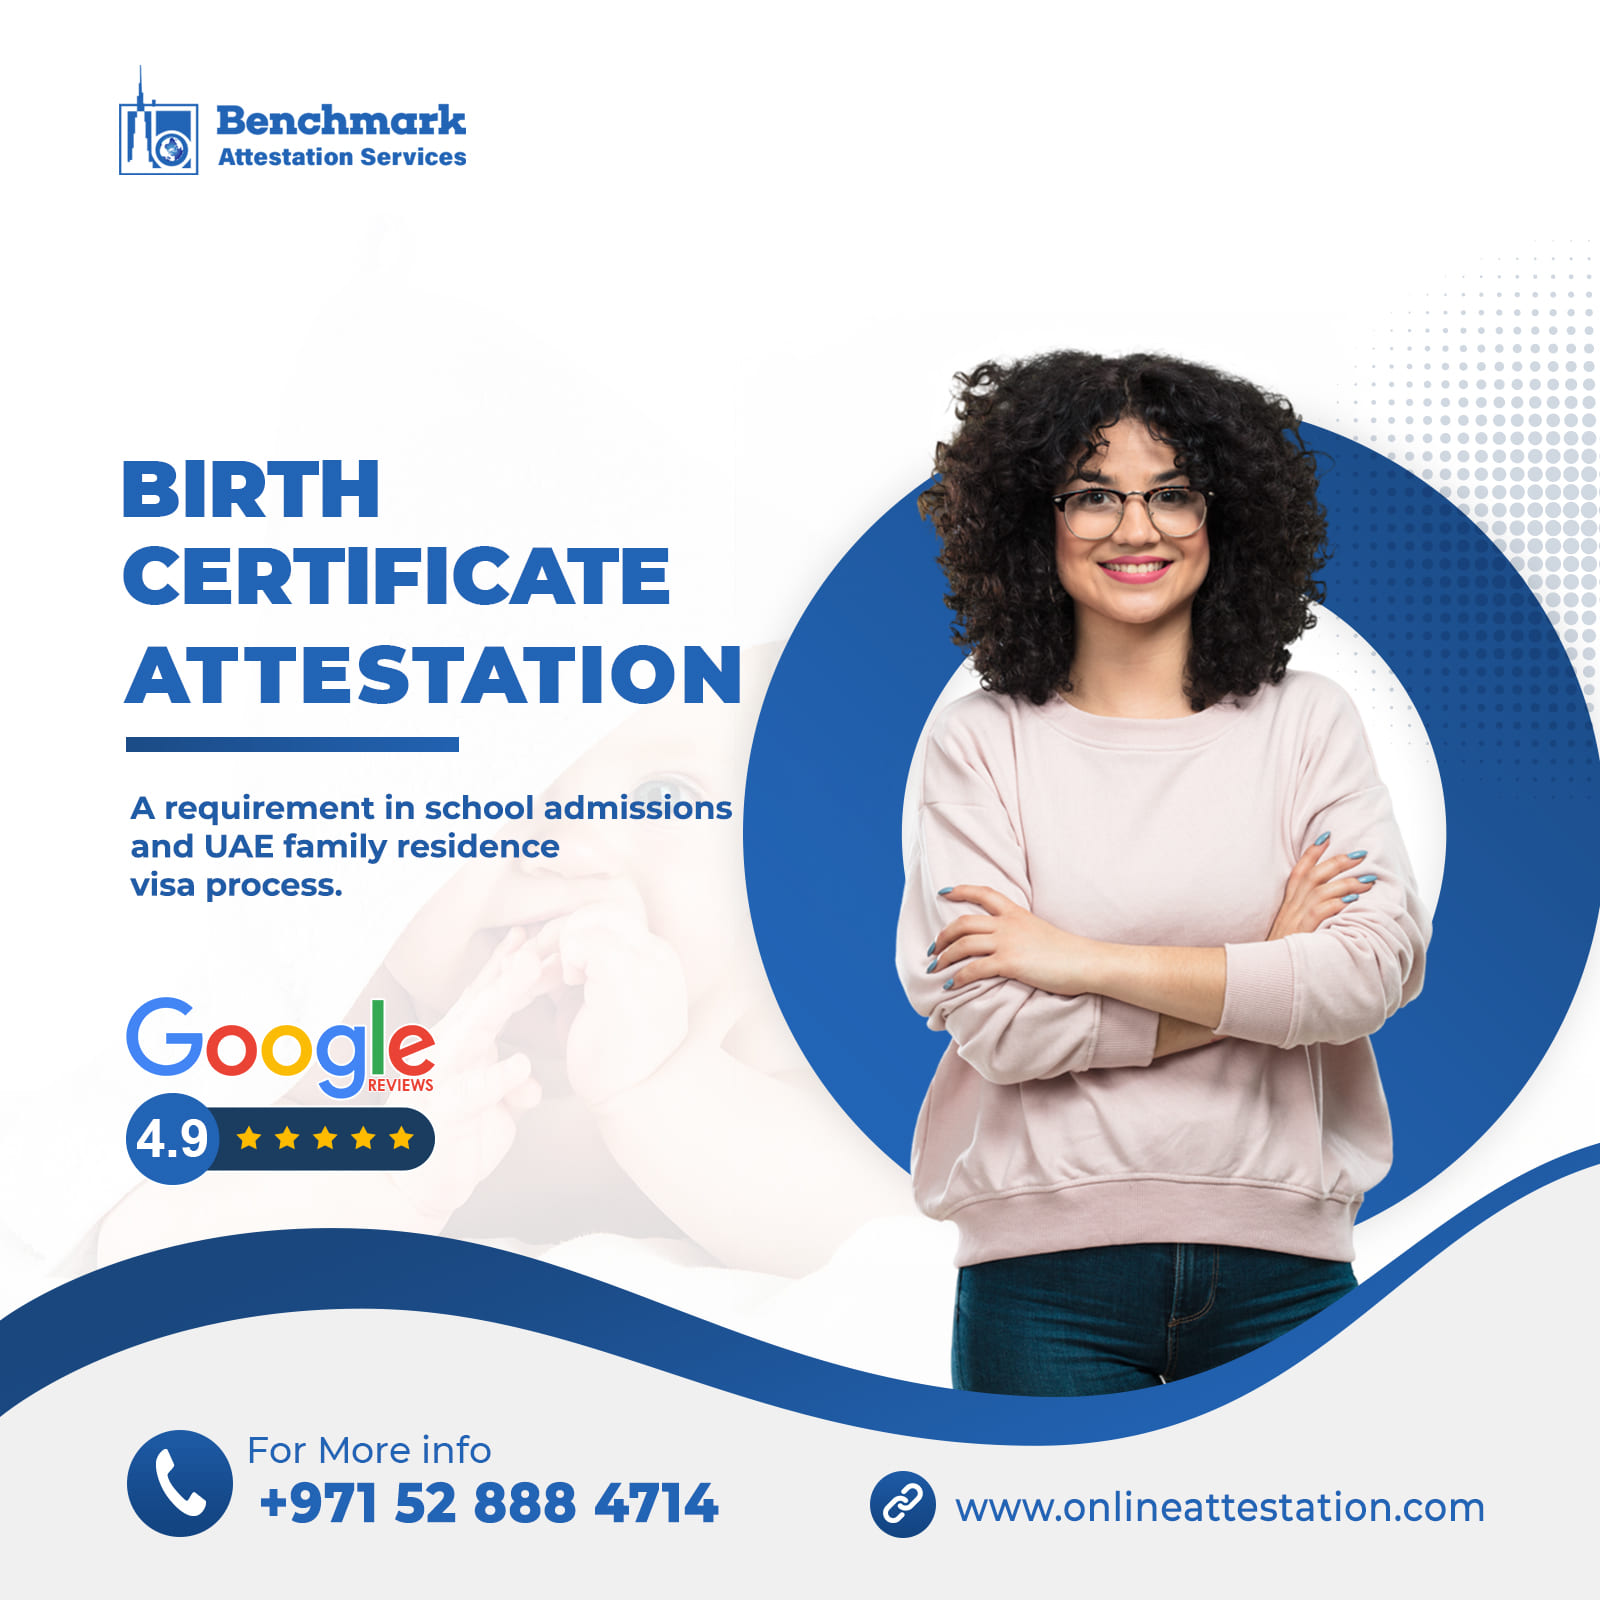 birth-certificate-attestation-atoallinks